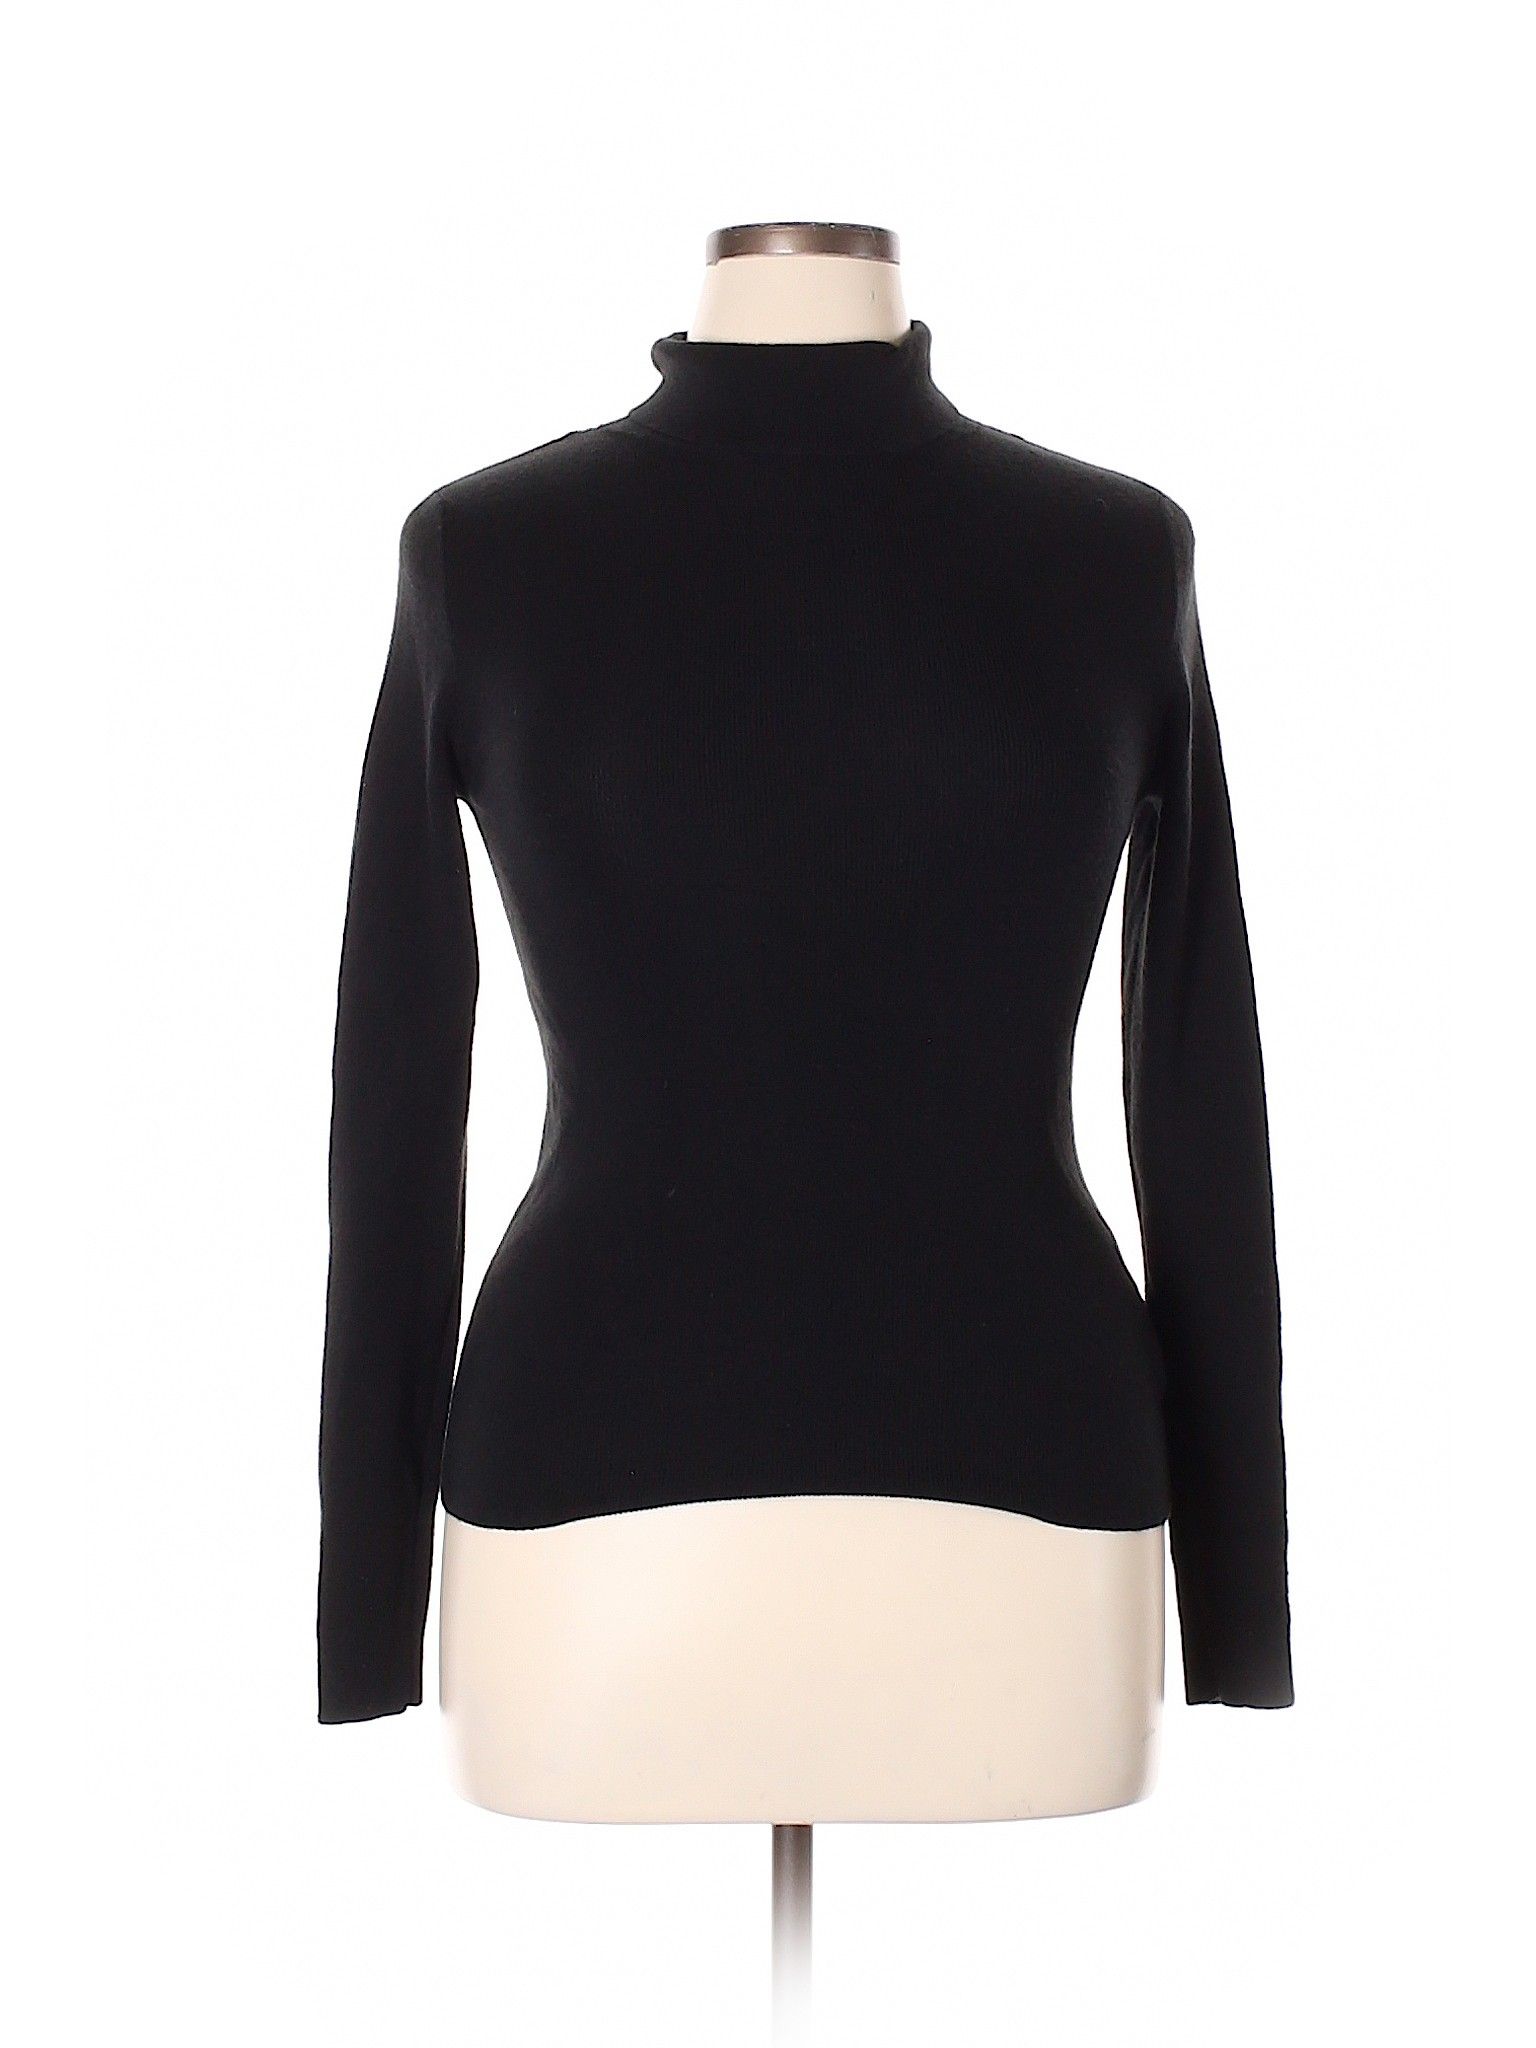 Forever 21 Turtleneck Sweater Size 12: Black Women's Tops - 44580935 | thredUP